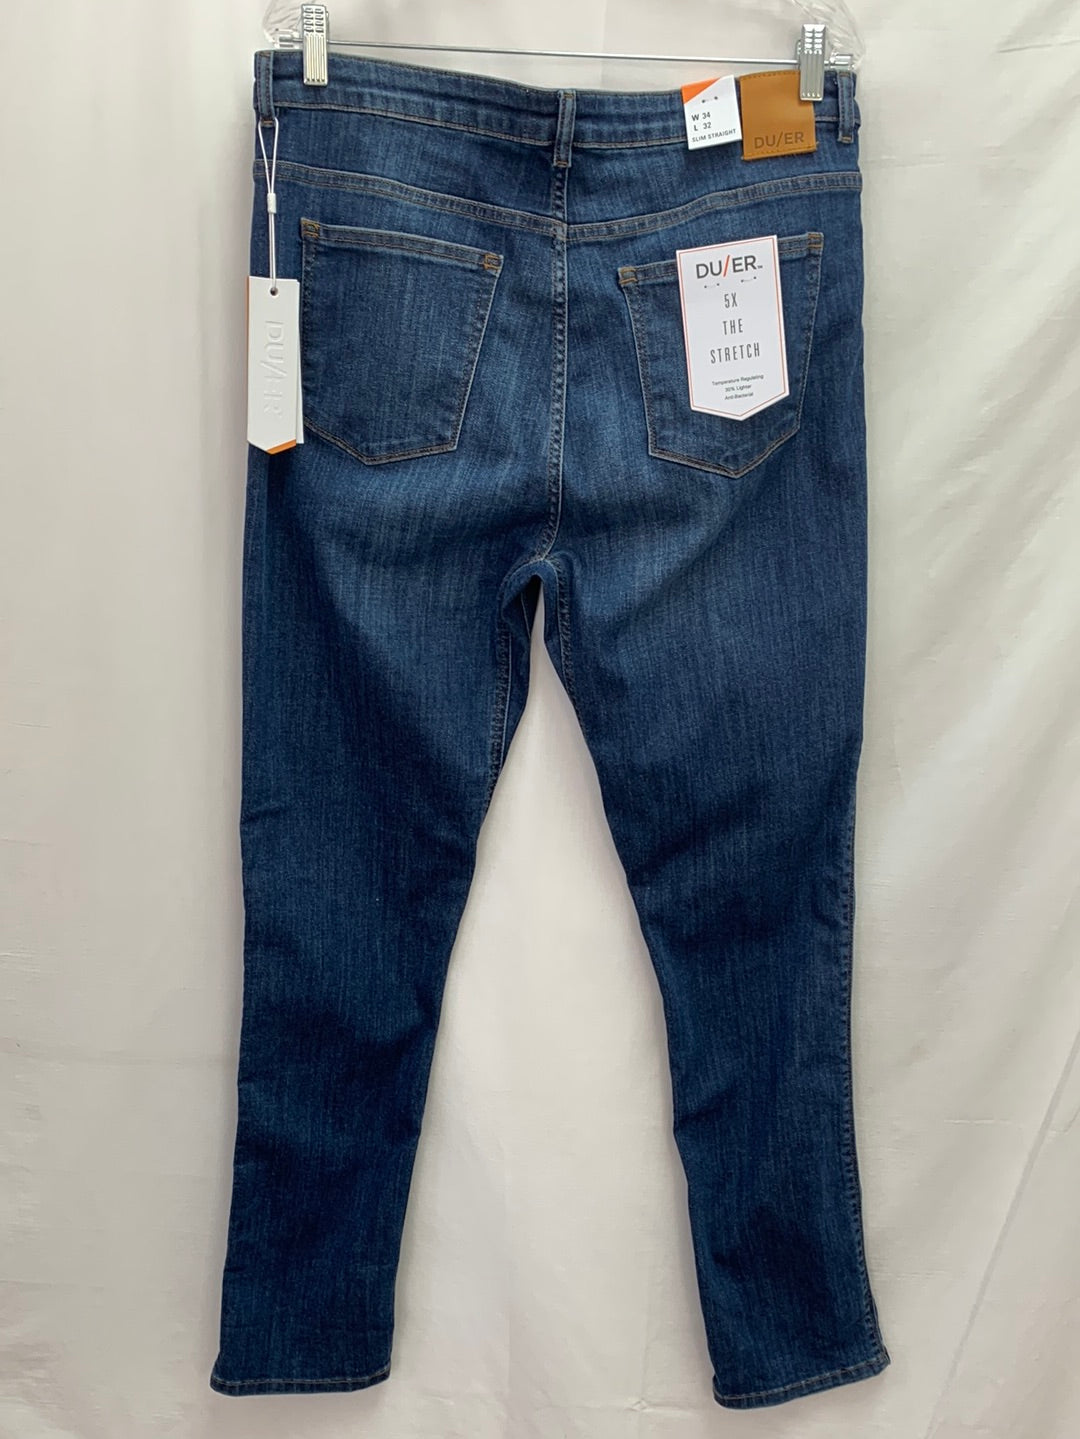 NWT - DU/ER aged med stone blue Mid Rise Slim Straight Jeans - 34x32